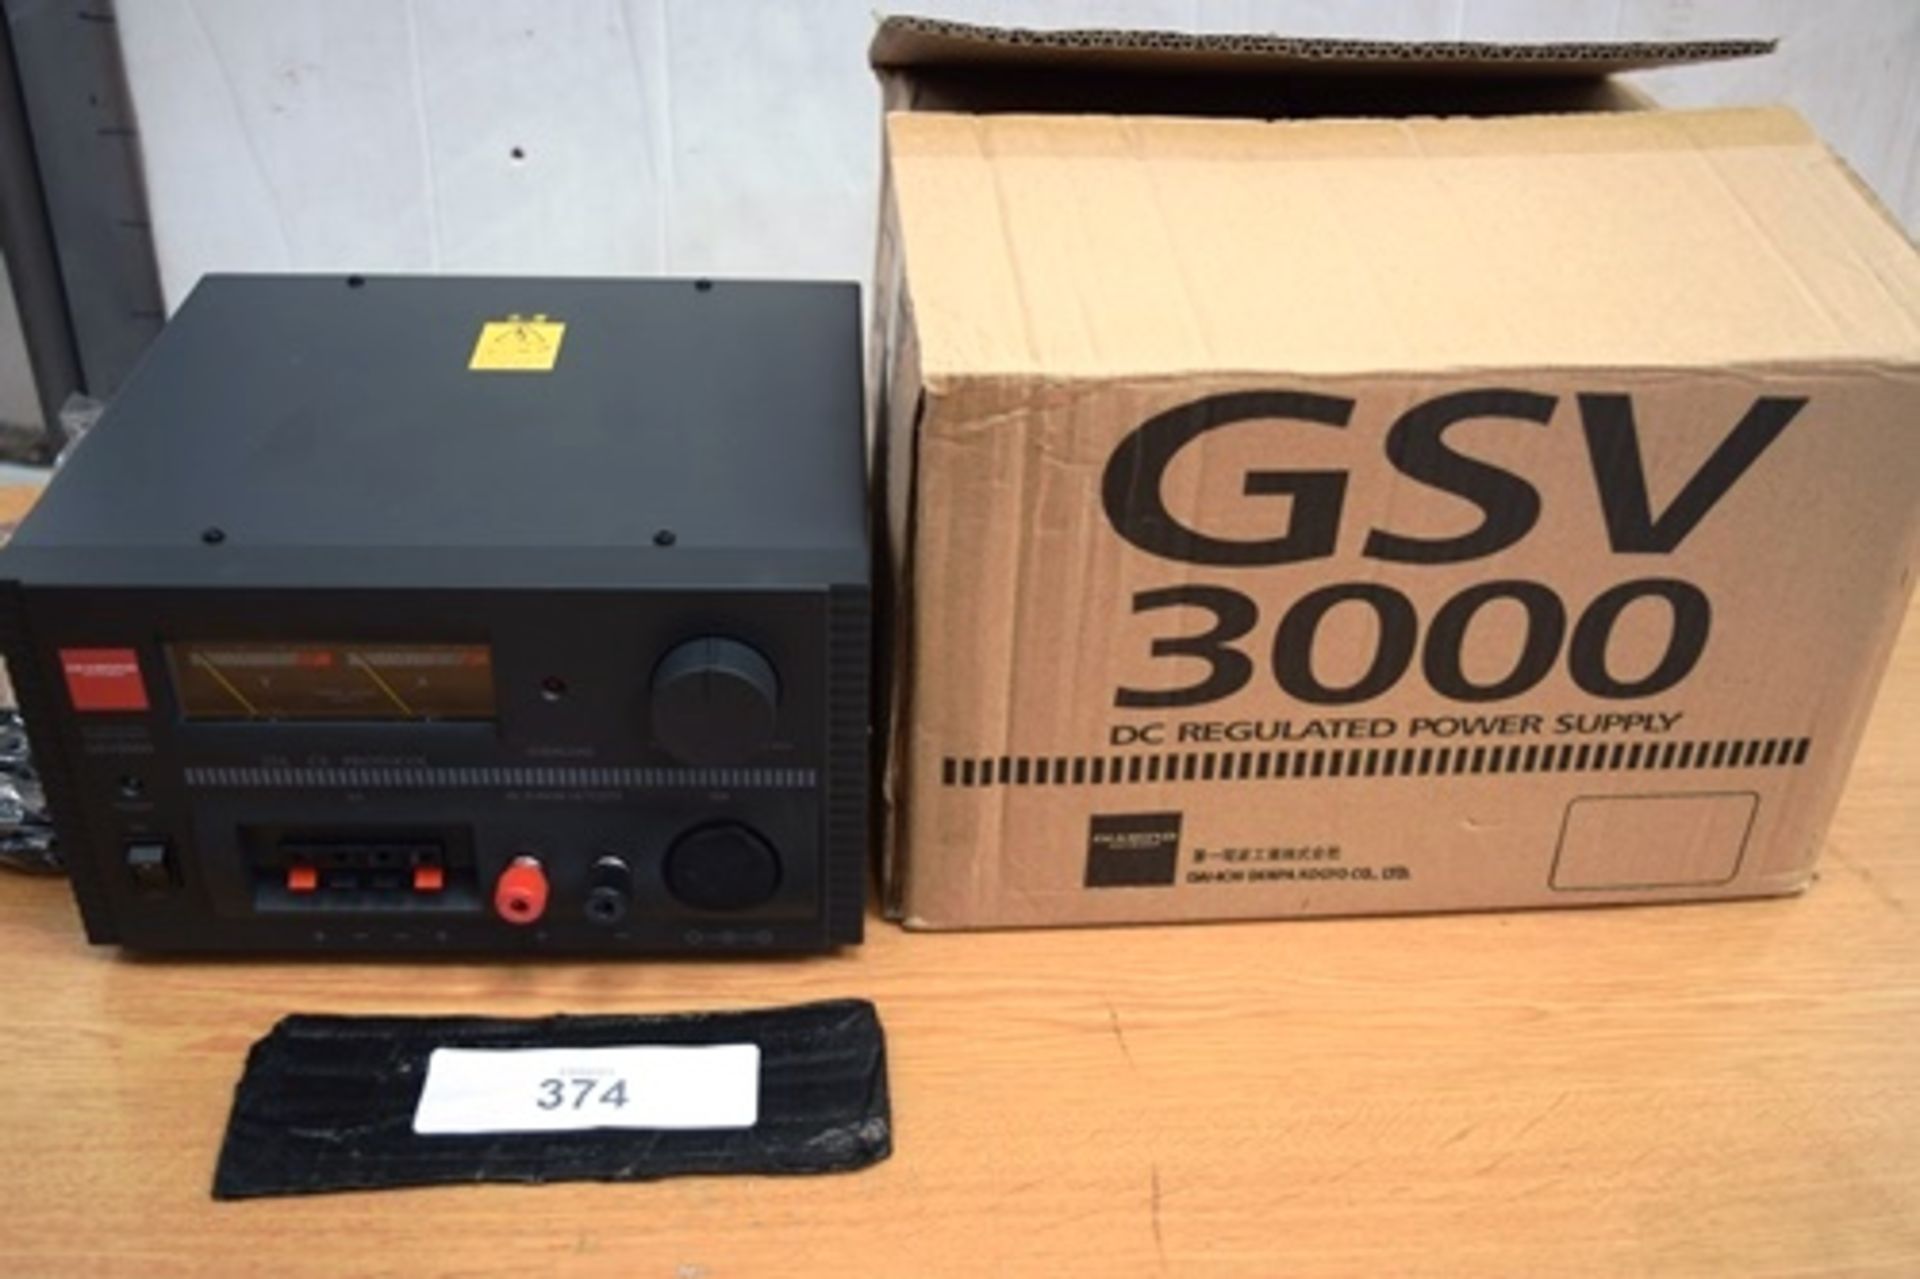 1 x Diamond Antenna DC regulated power supply, model GSV3000, 2 pin plug - New in box (GS8)